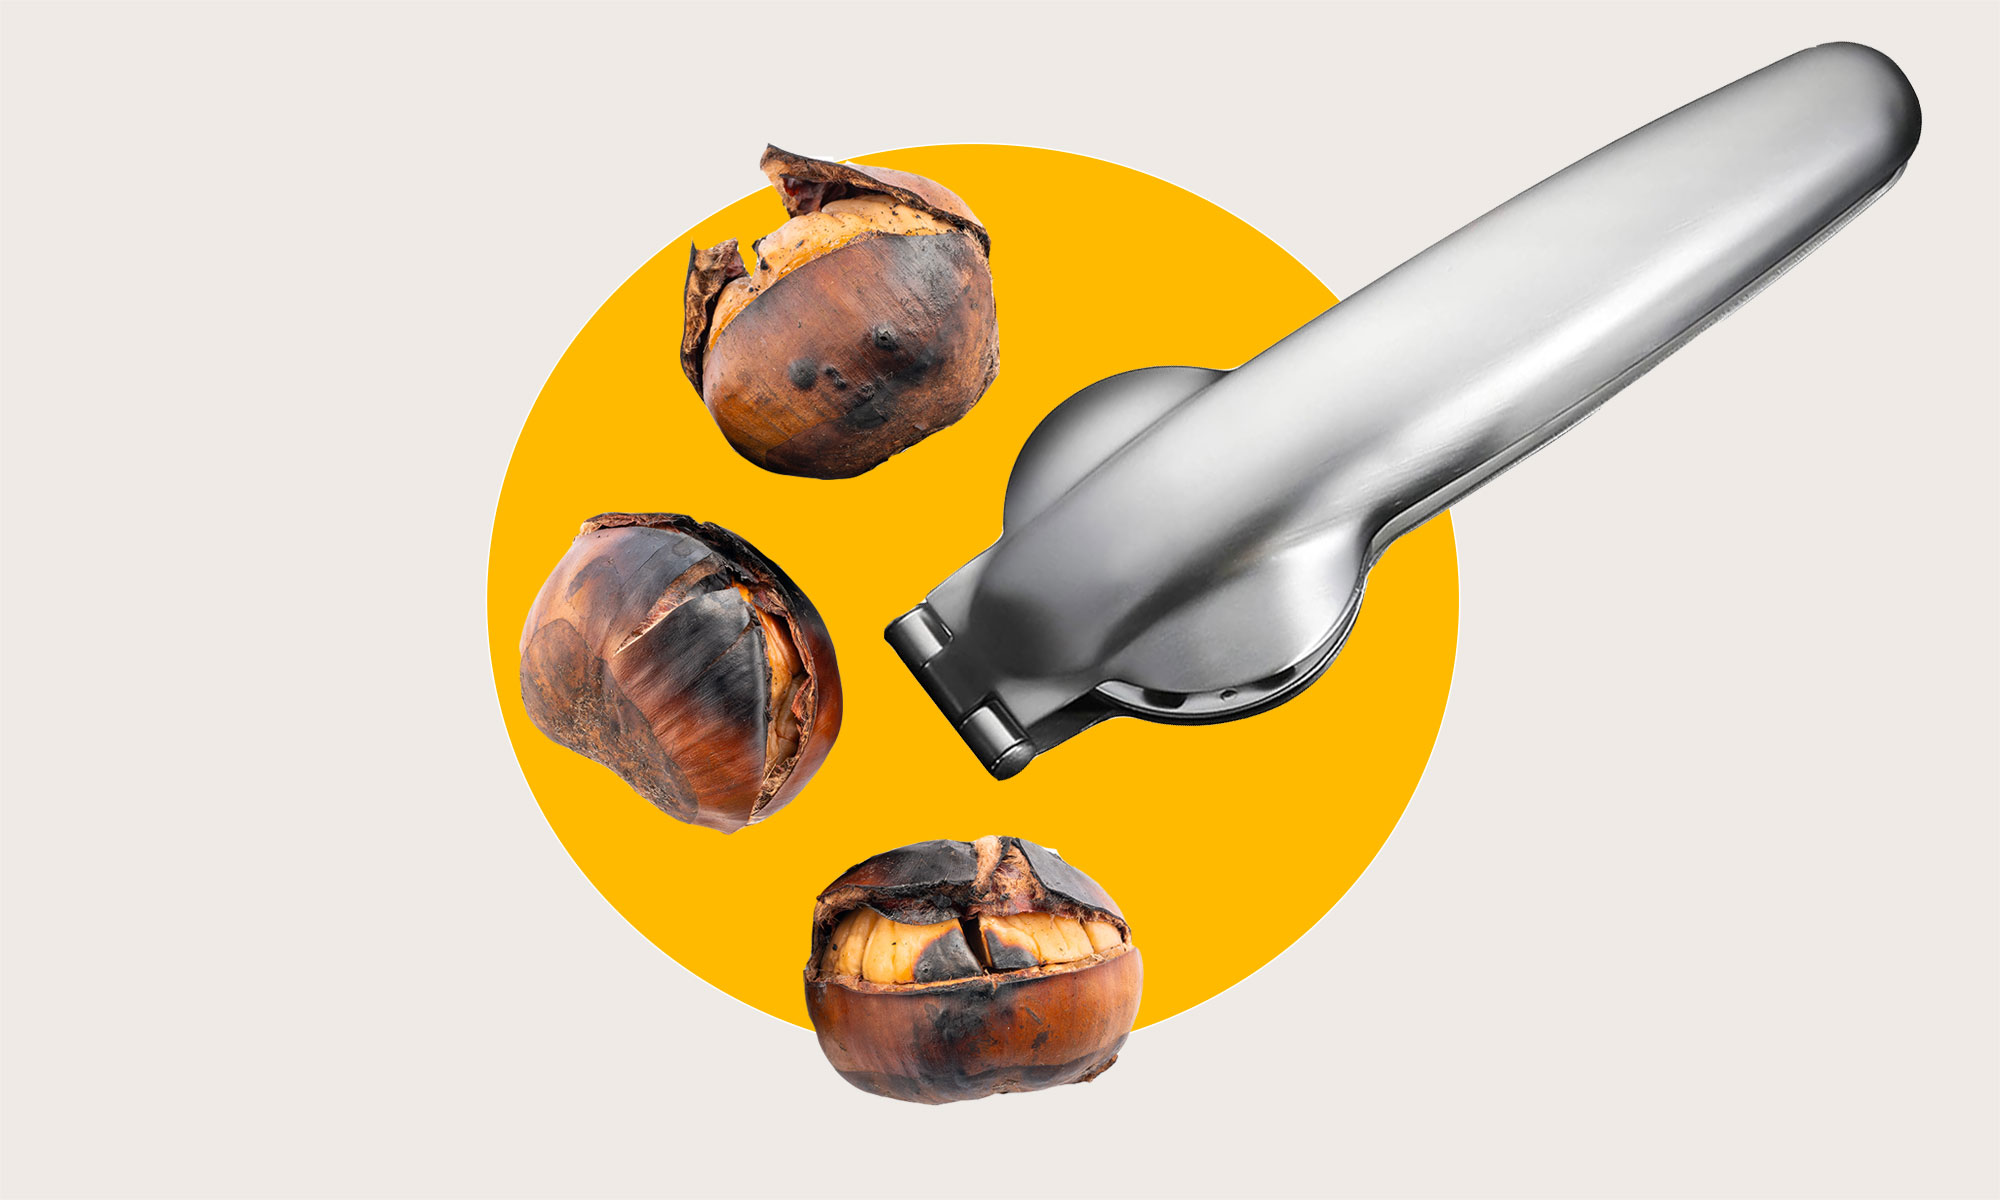 A chestnut scoring tool alongside three roasted chestnuts.